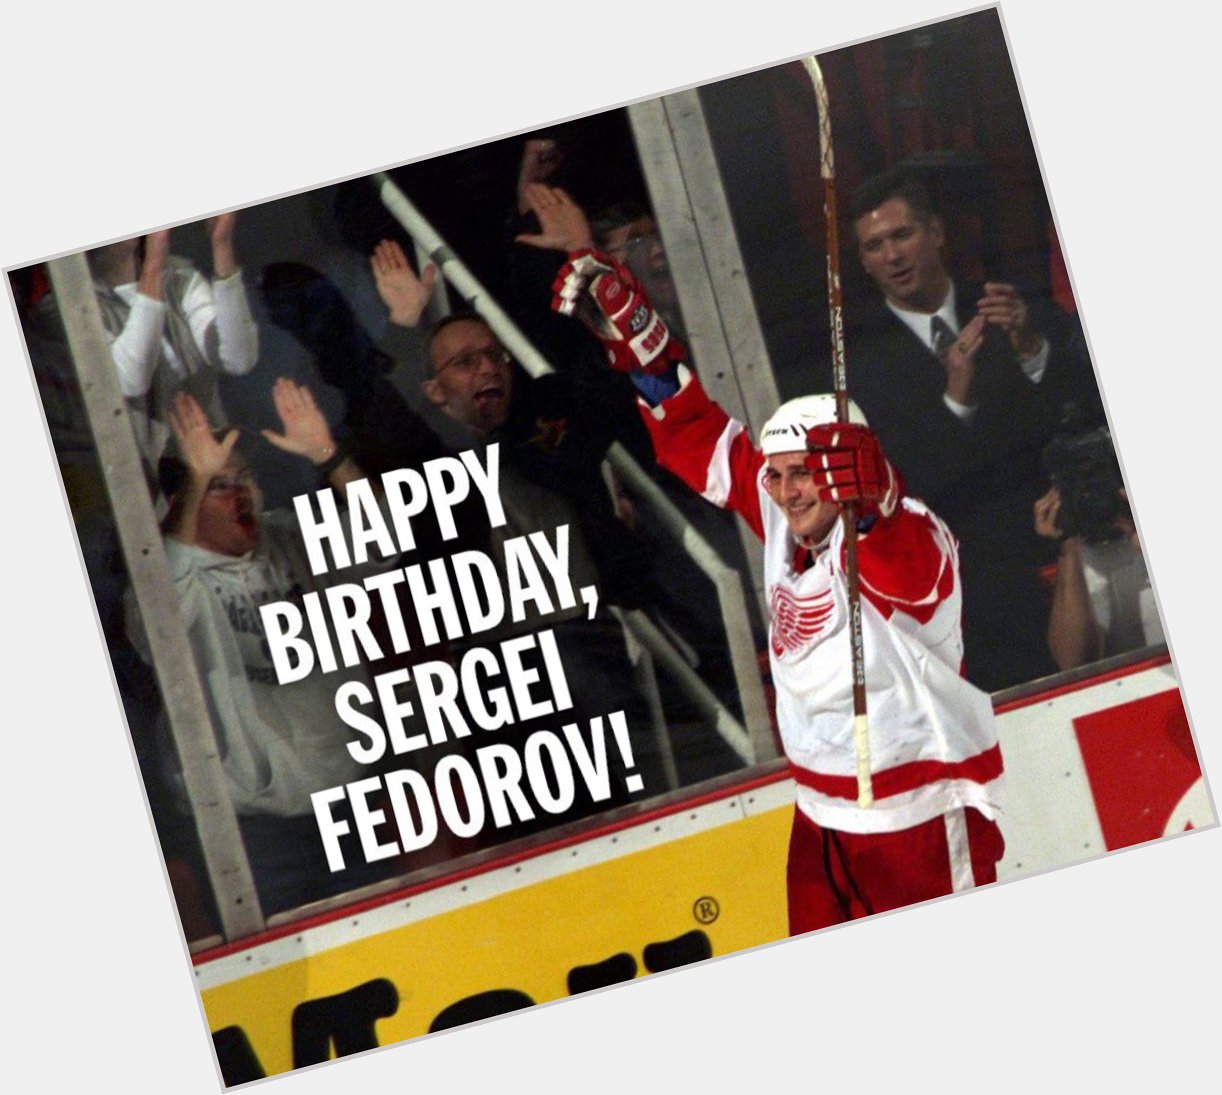 Happy birthday, Sergei Fedorov! via 